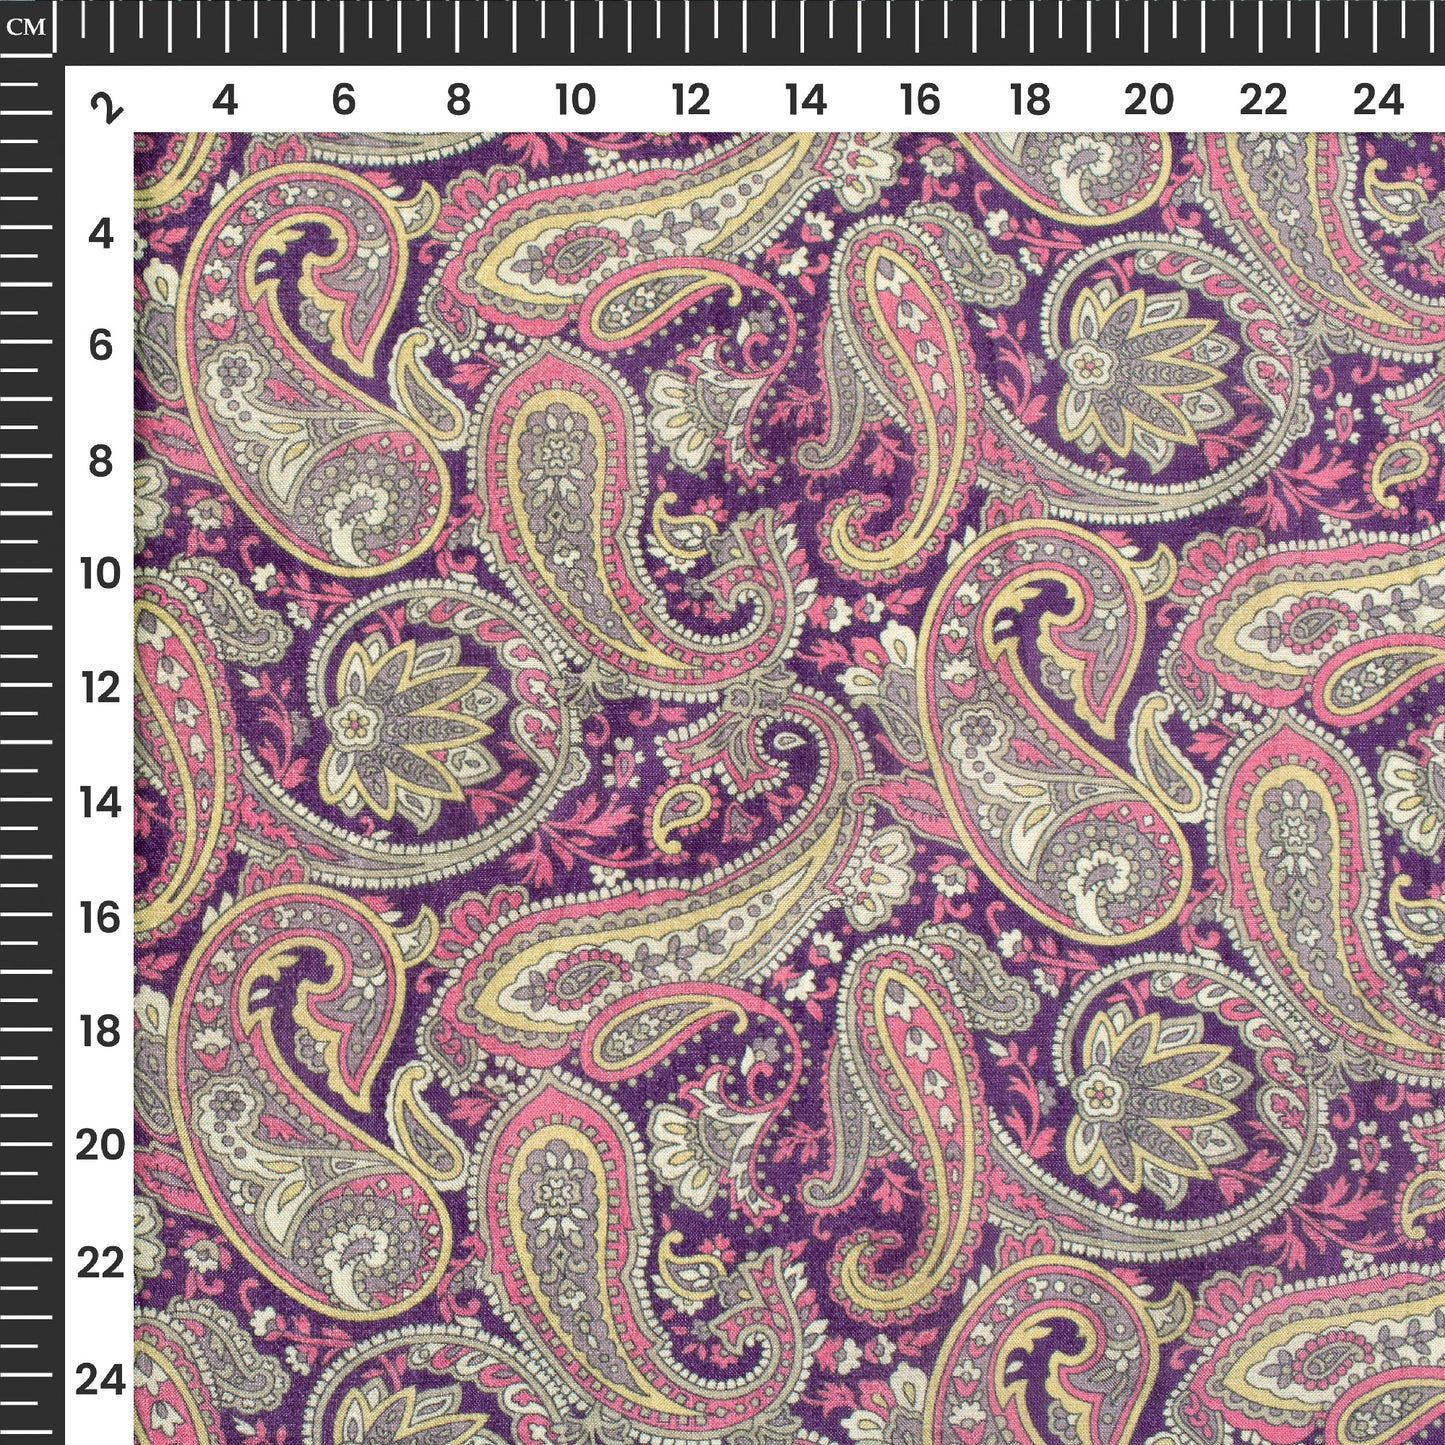 Violet Purple Paisley Digital Print Viscose Uppada Silk Fabric